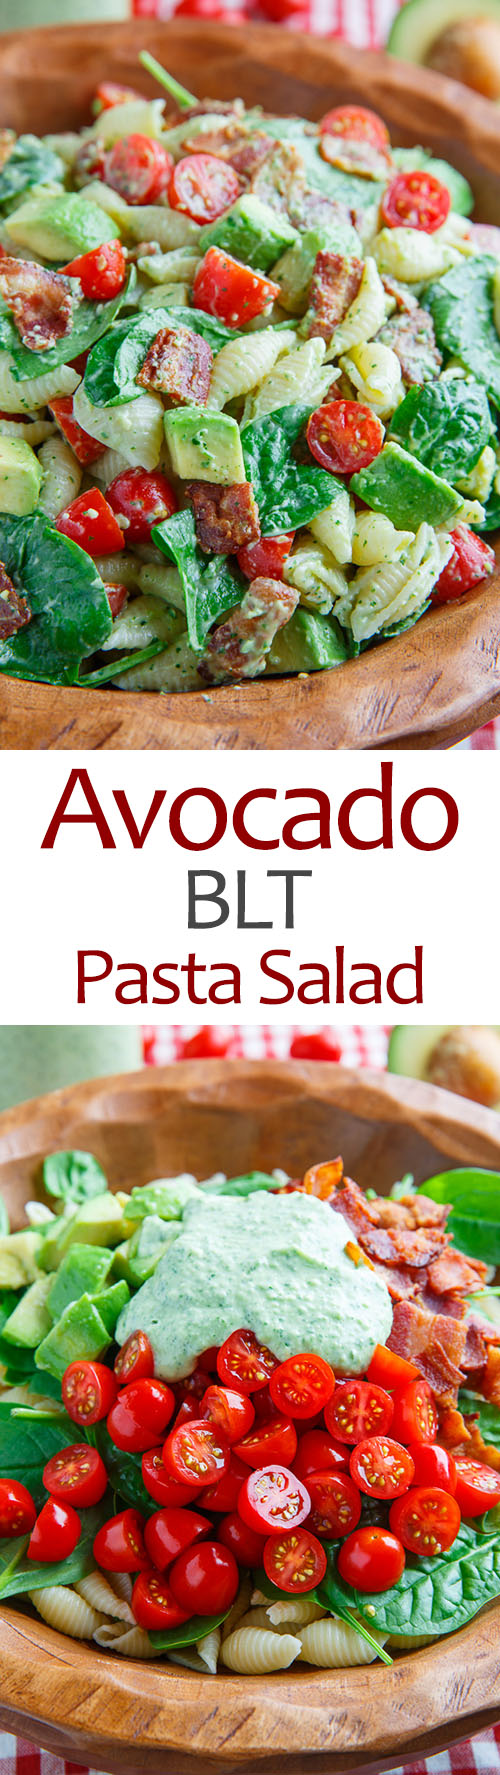 Avocado BLT Pasta Salad